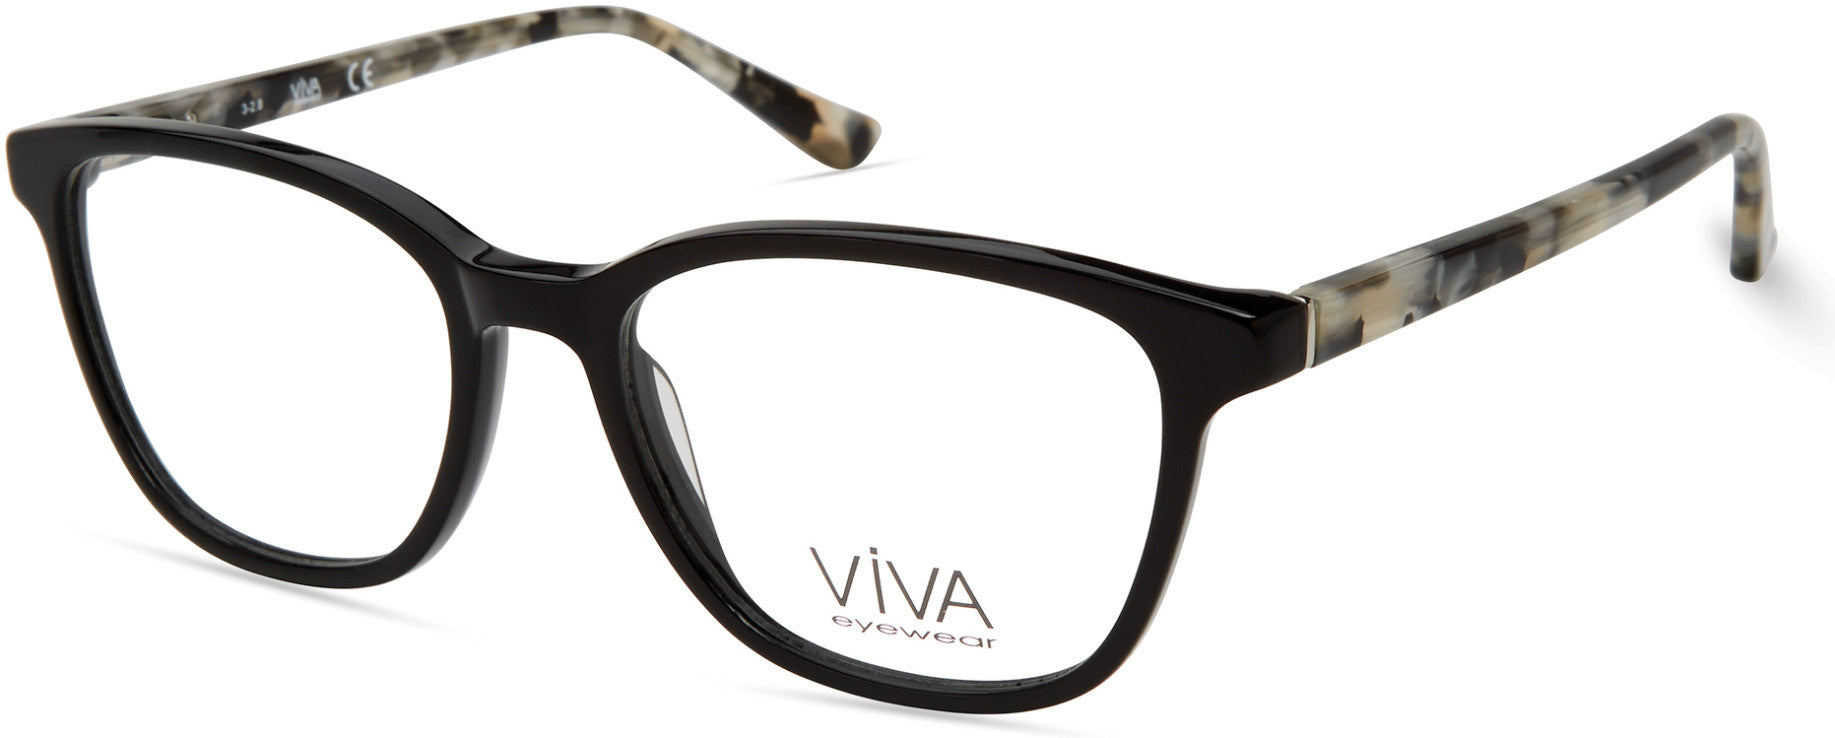 Viva VV4517 Geometric Eyeglasses 001-001 - Shiny Black